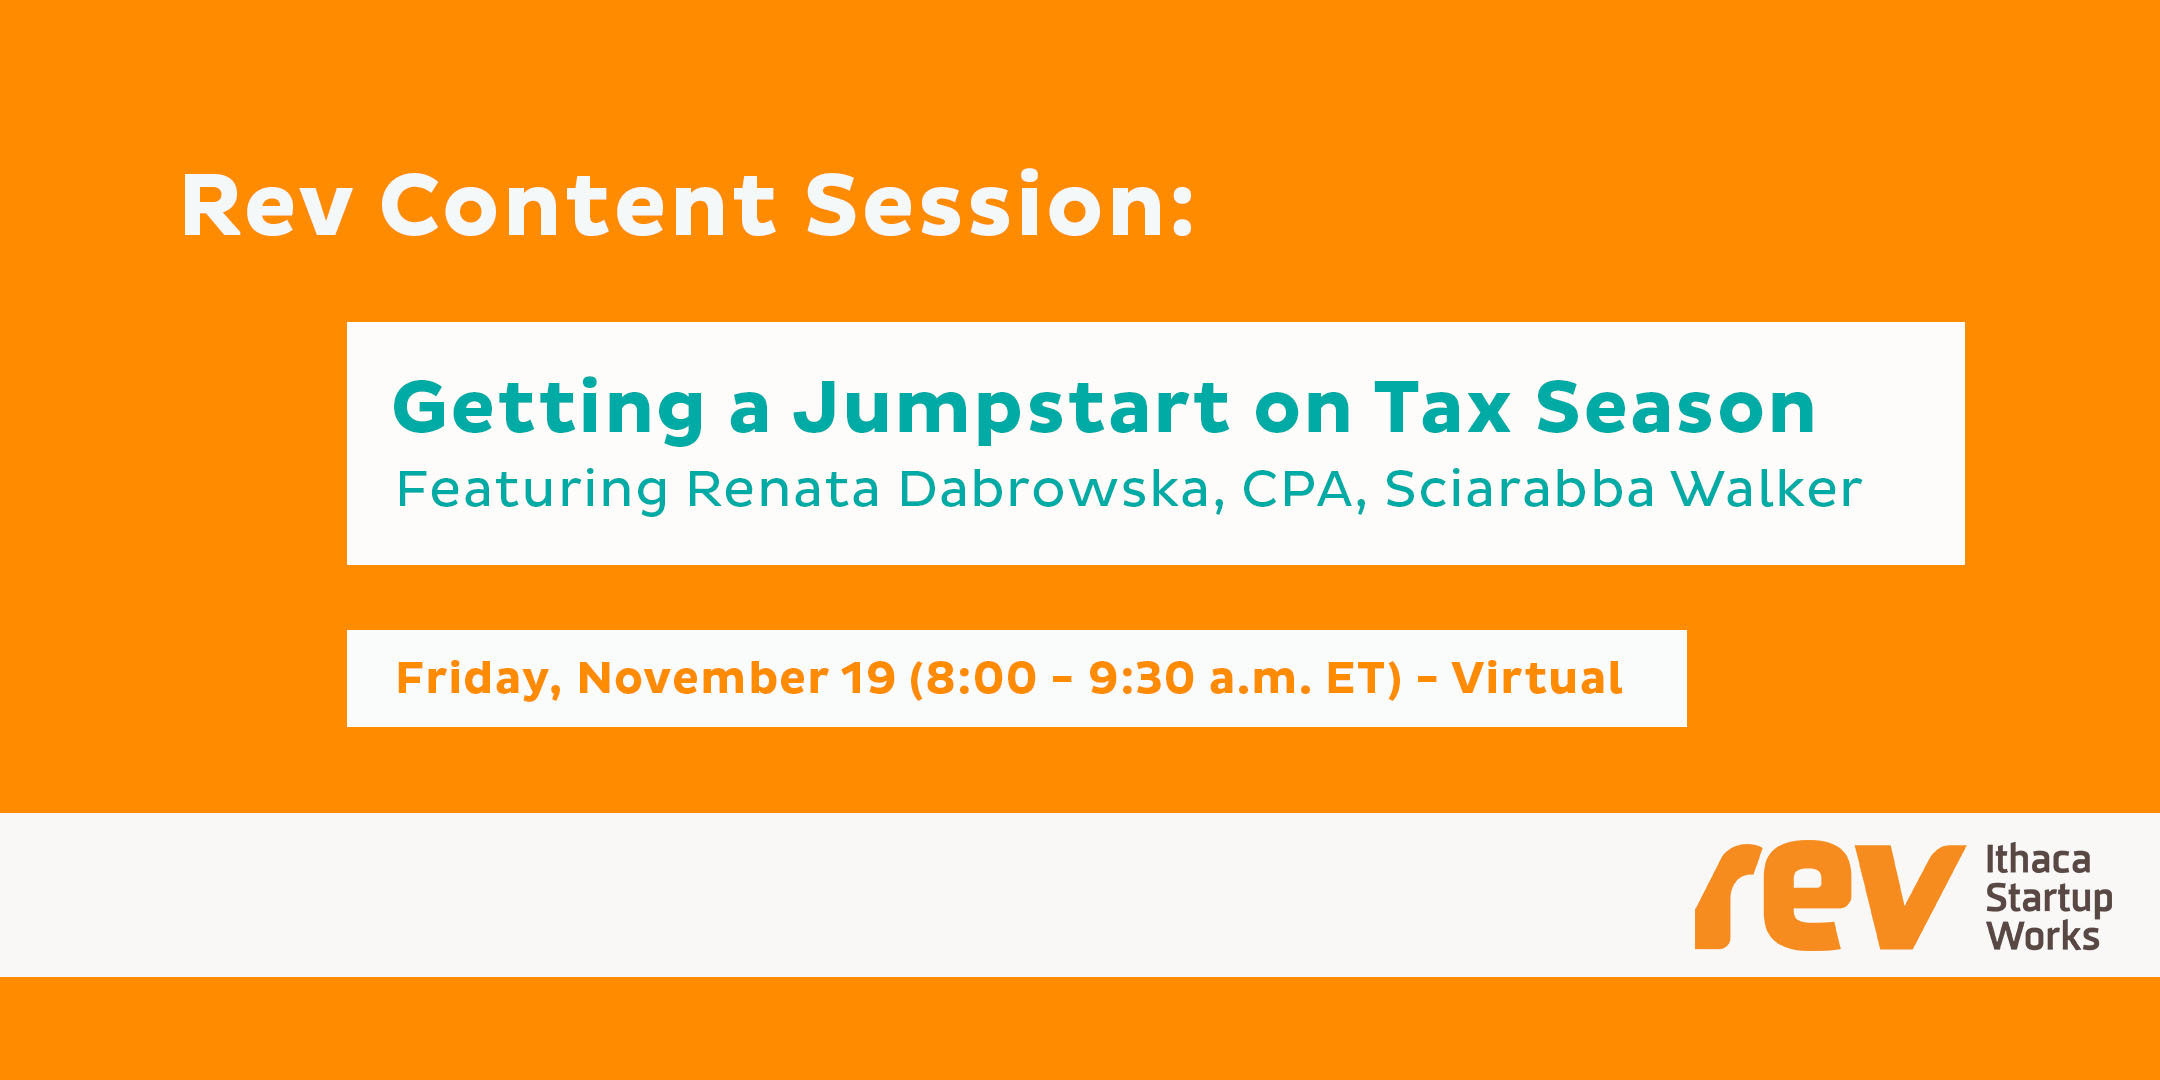 Rev Content Session: Getting a Jumpstart on Tax Season. Featuring Renata Dabrowska, CPA, Sciarabba Walker, Friday, November 19 (8am - 9:30am ET) Virtual